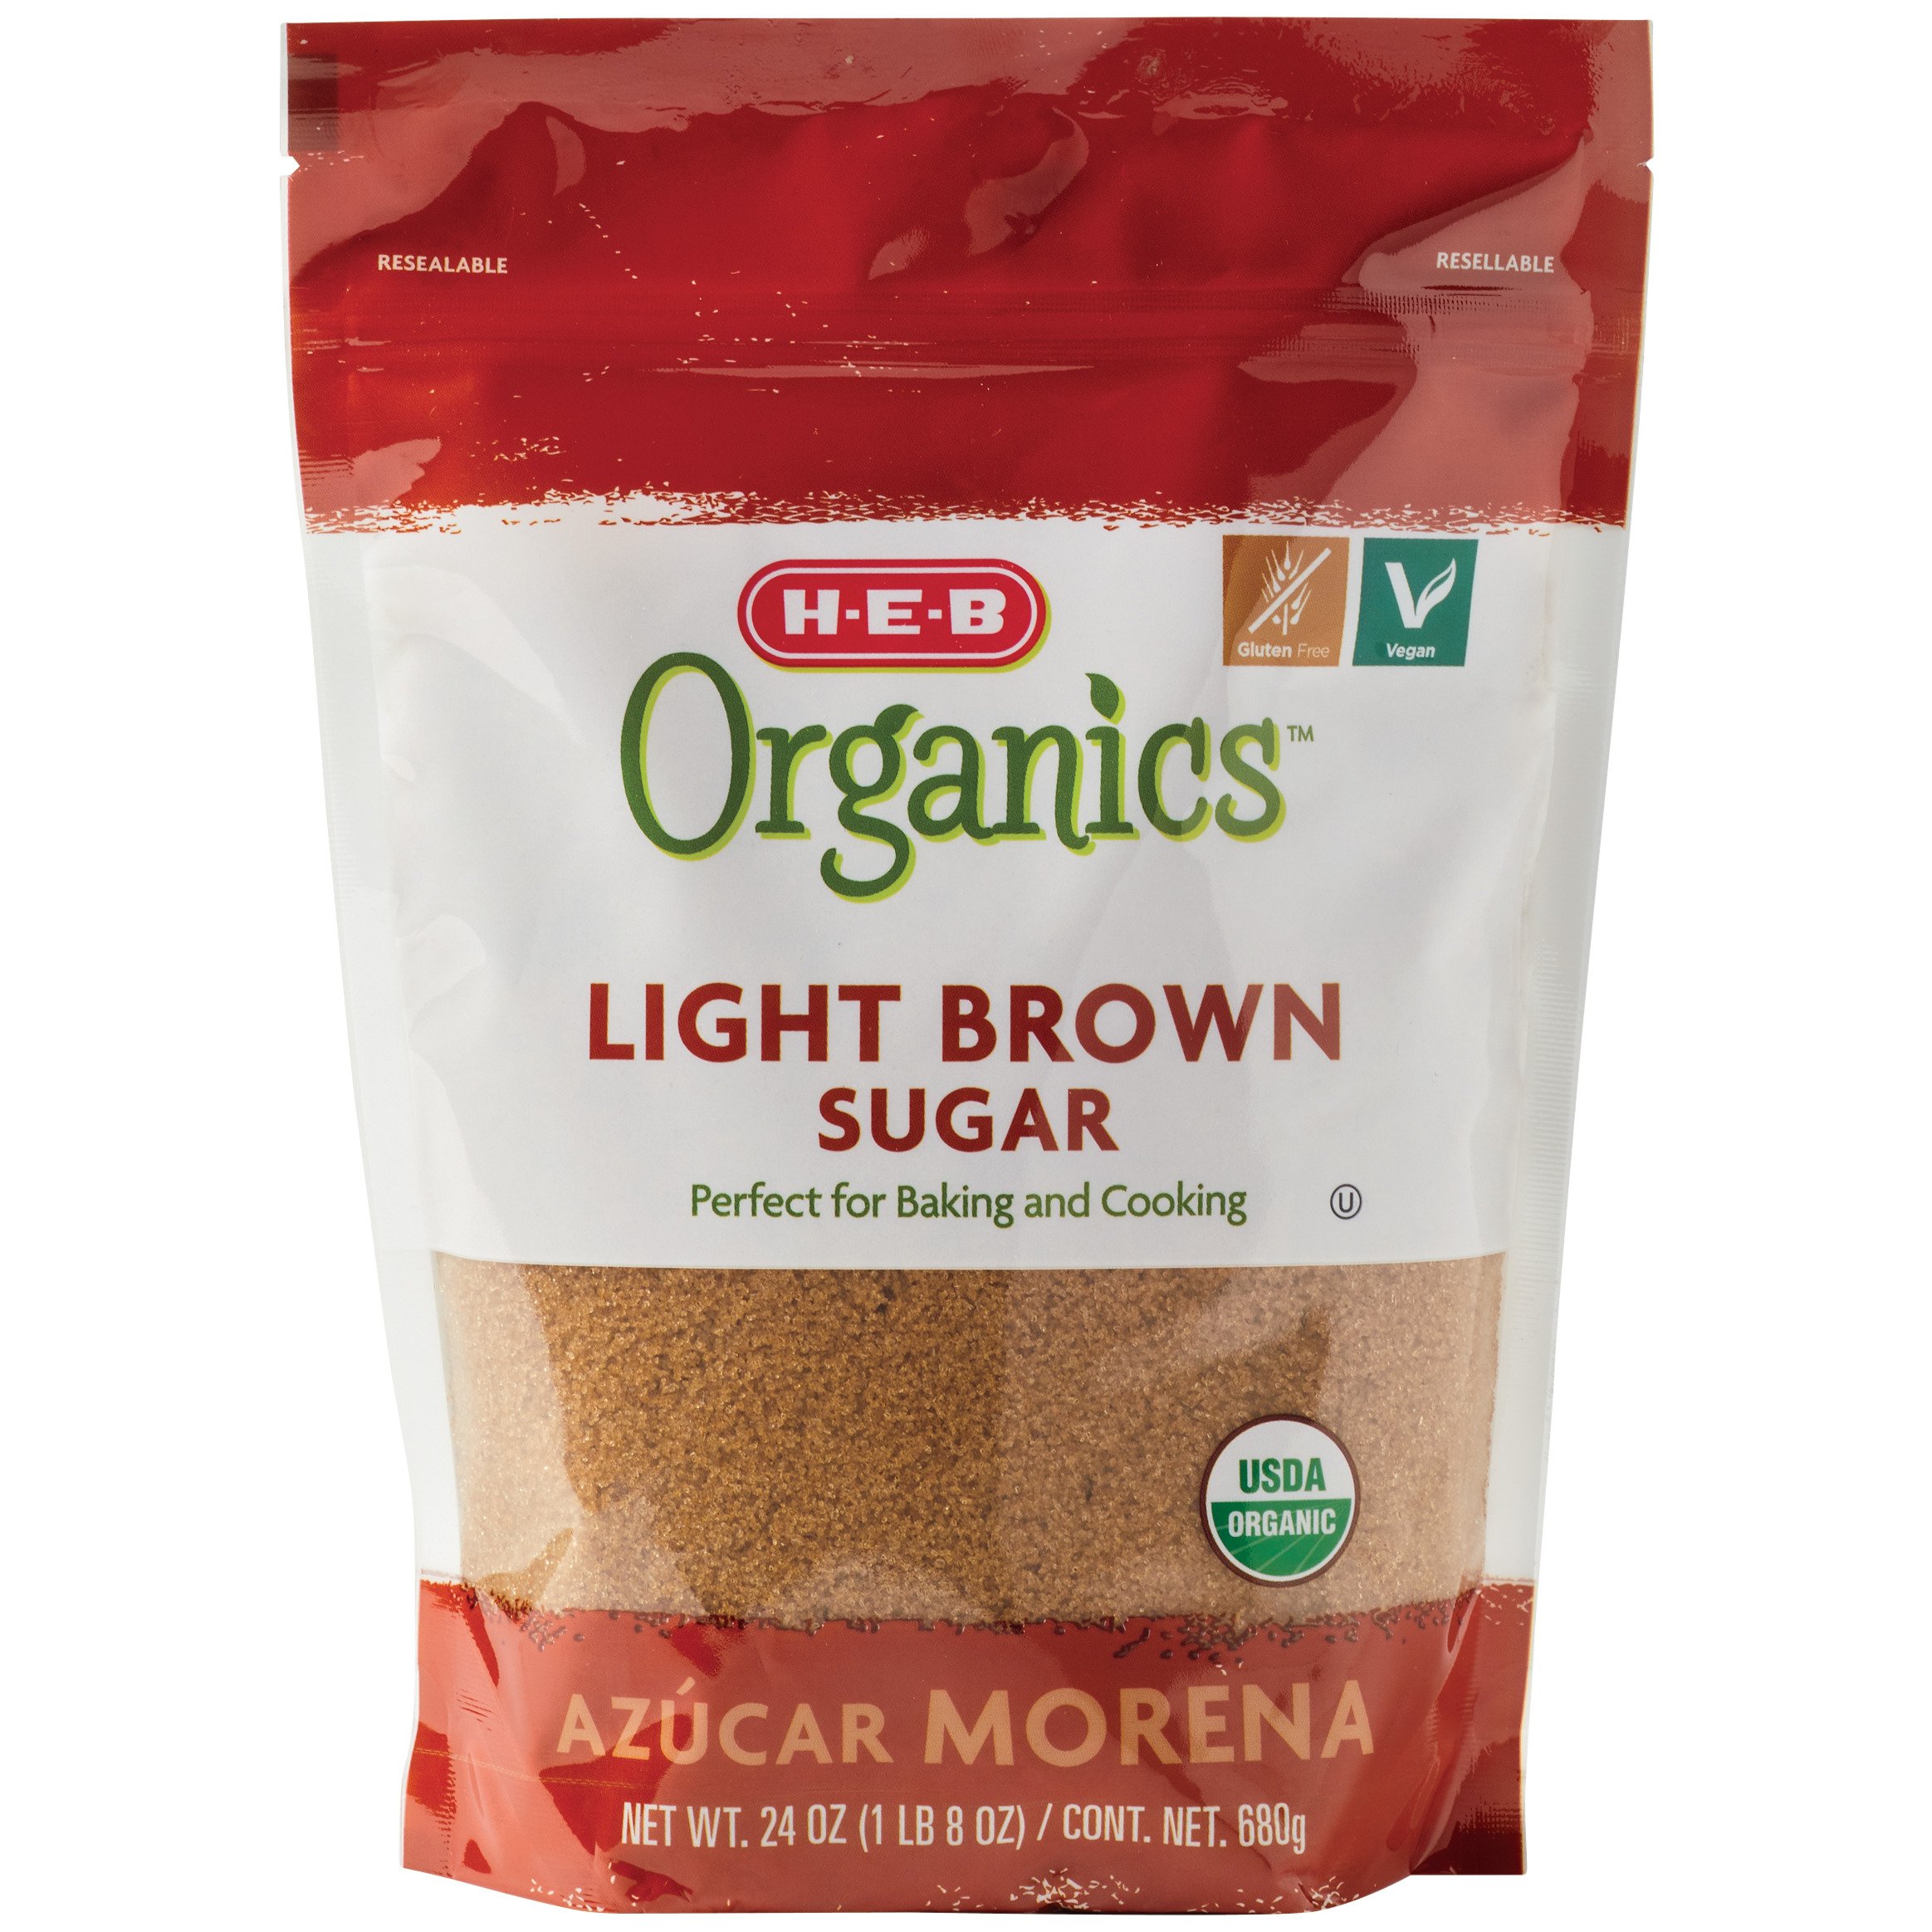 H-E-B Organics Light Brown Sugar